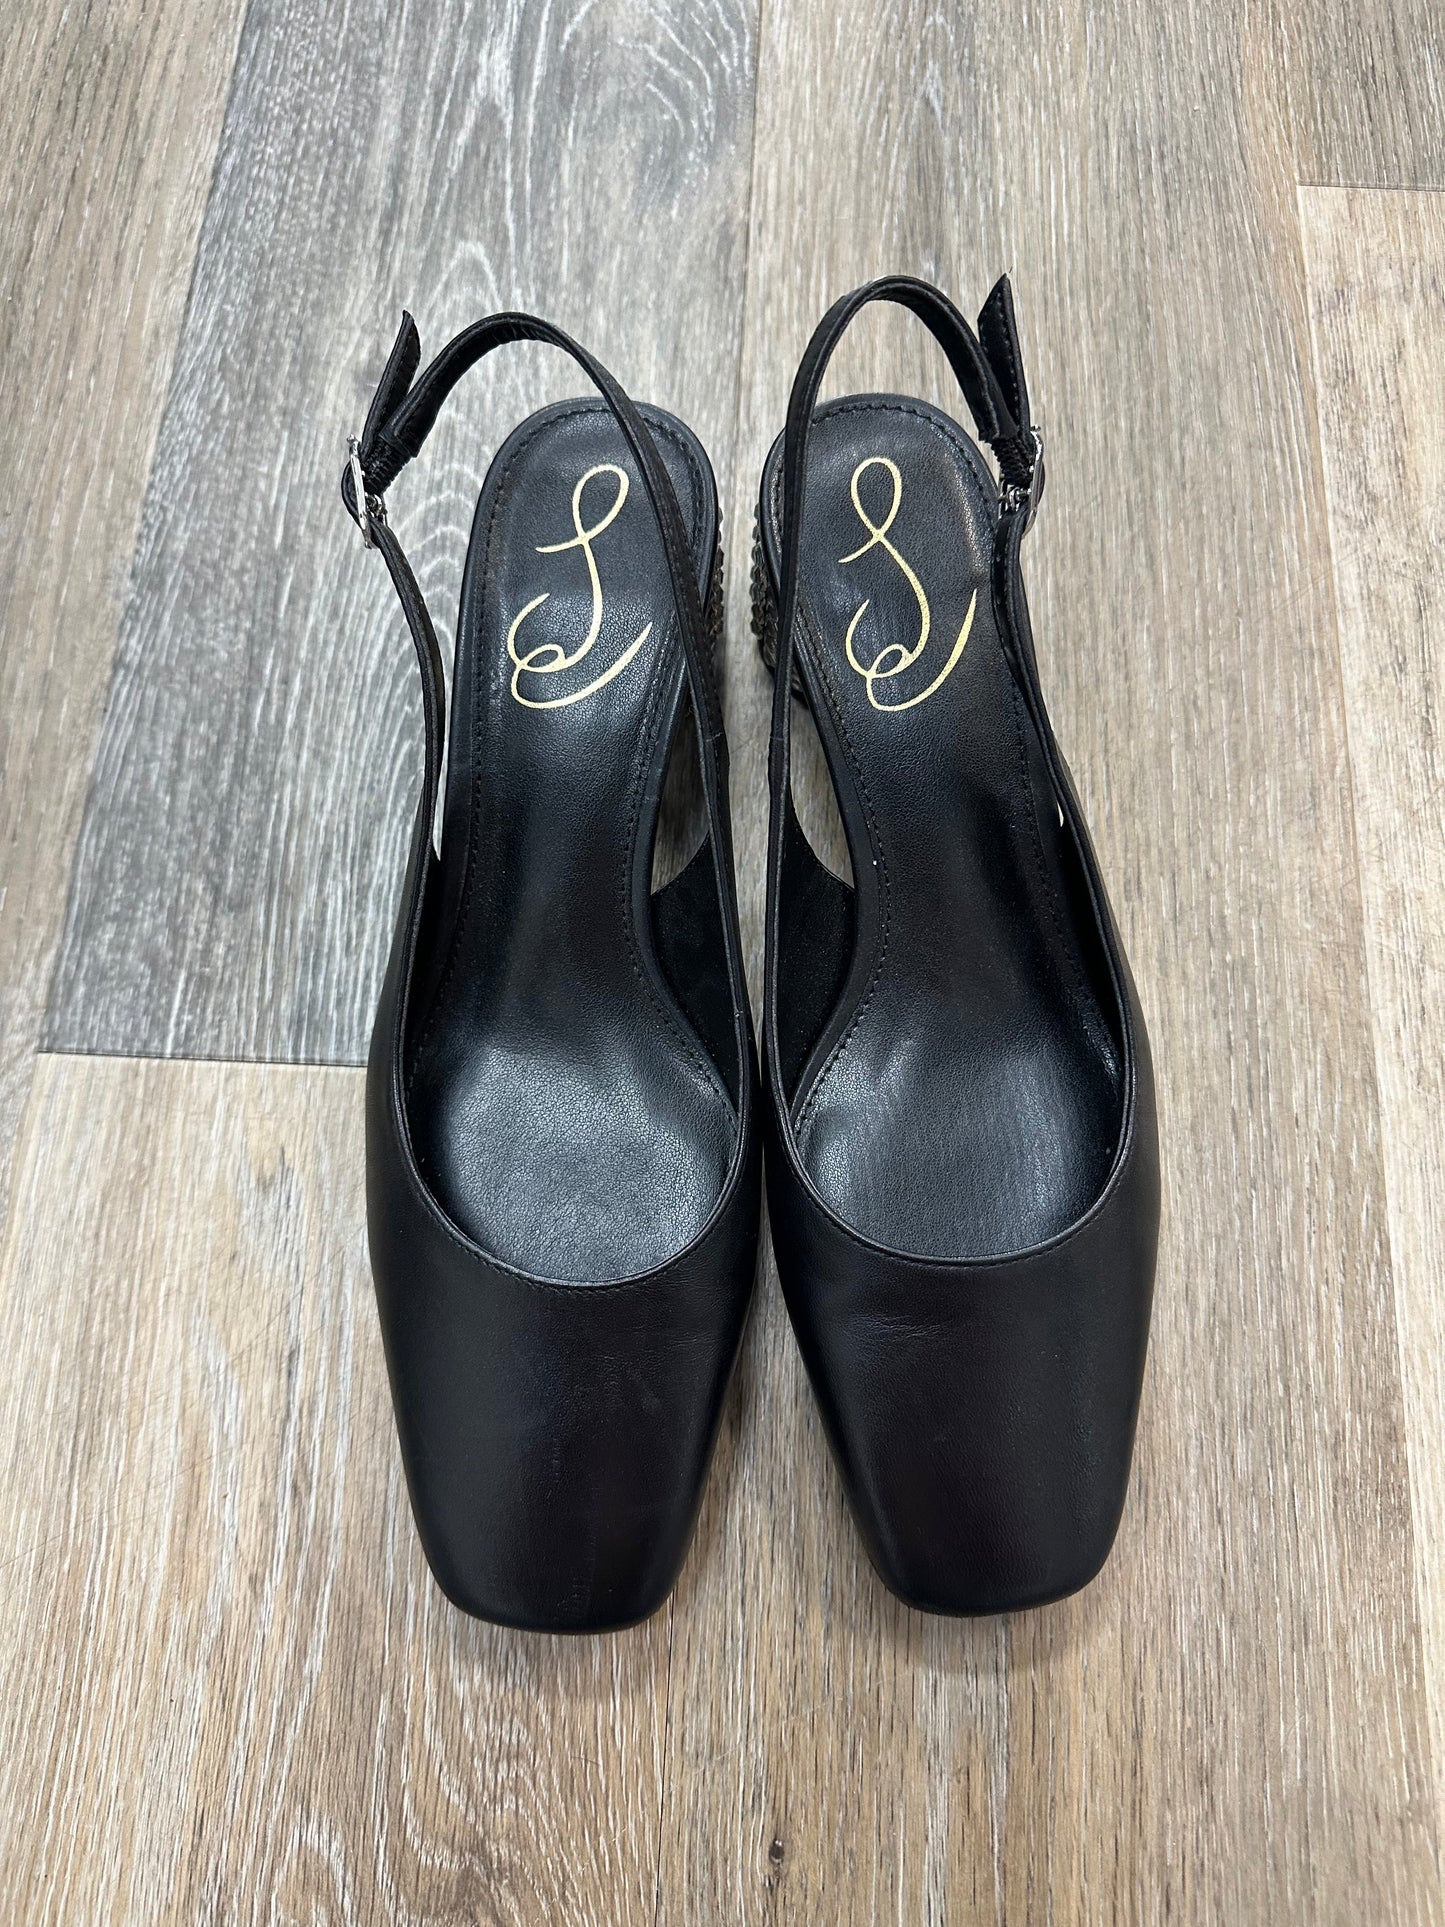 Black Shoes Heels Block Sam Edelman, Size 6.5